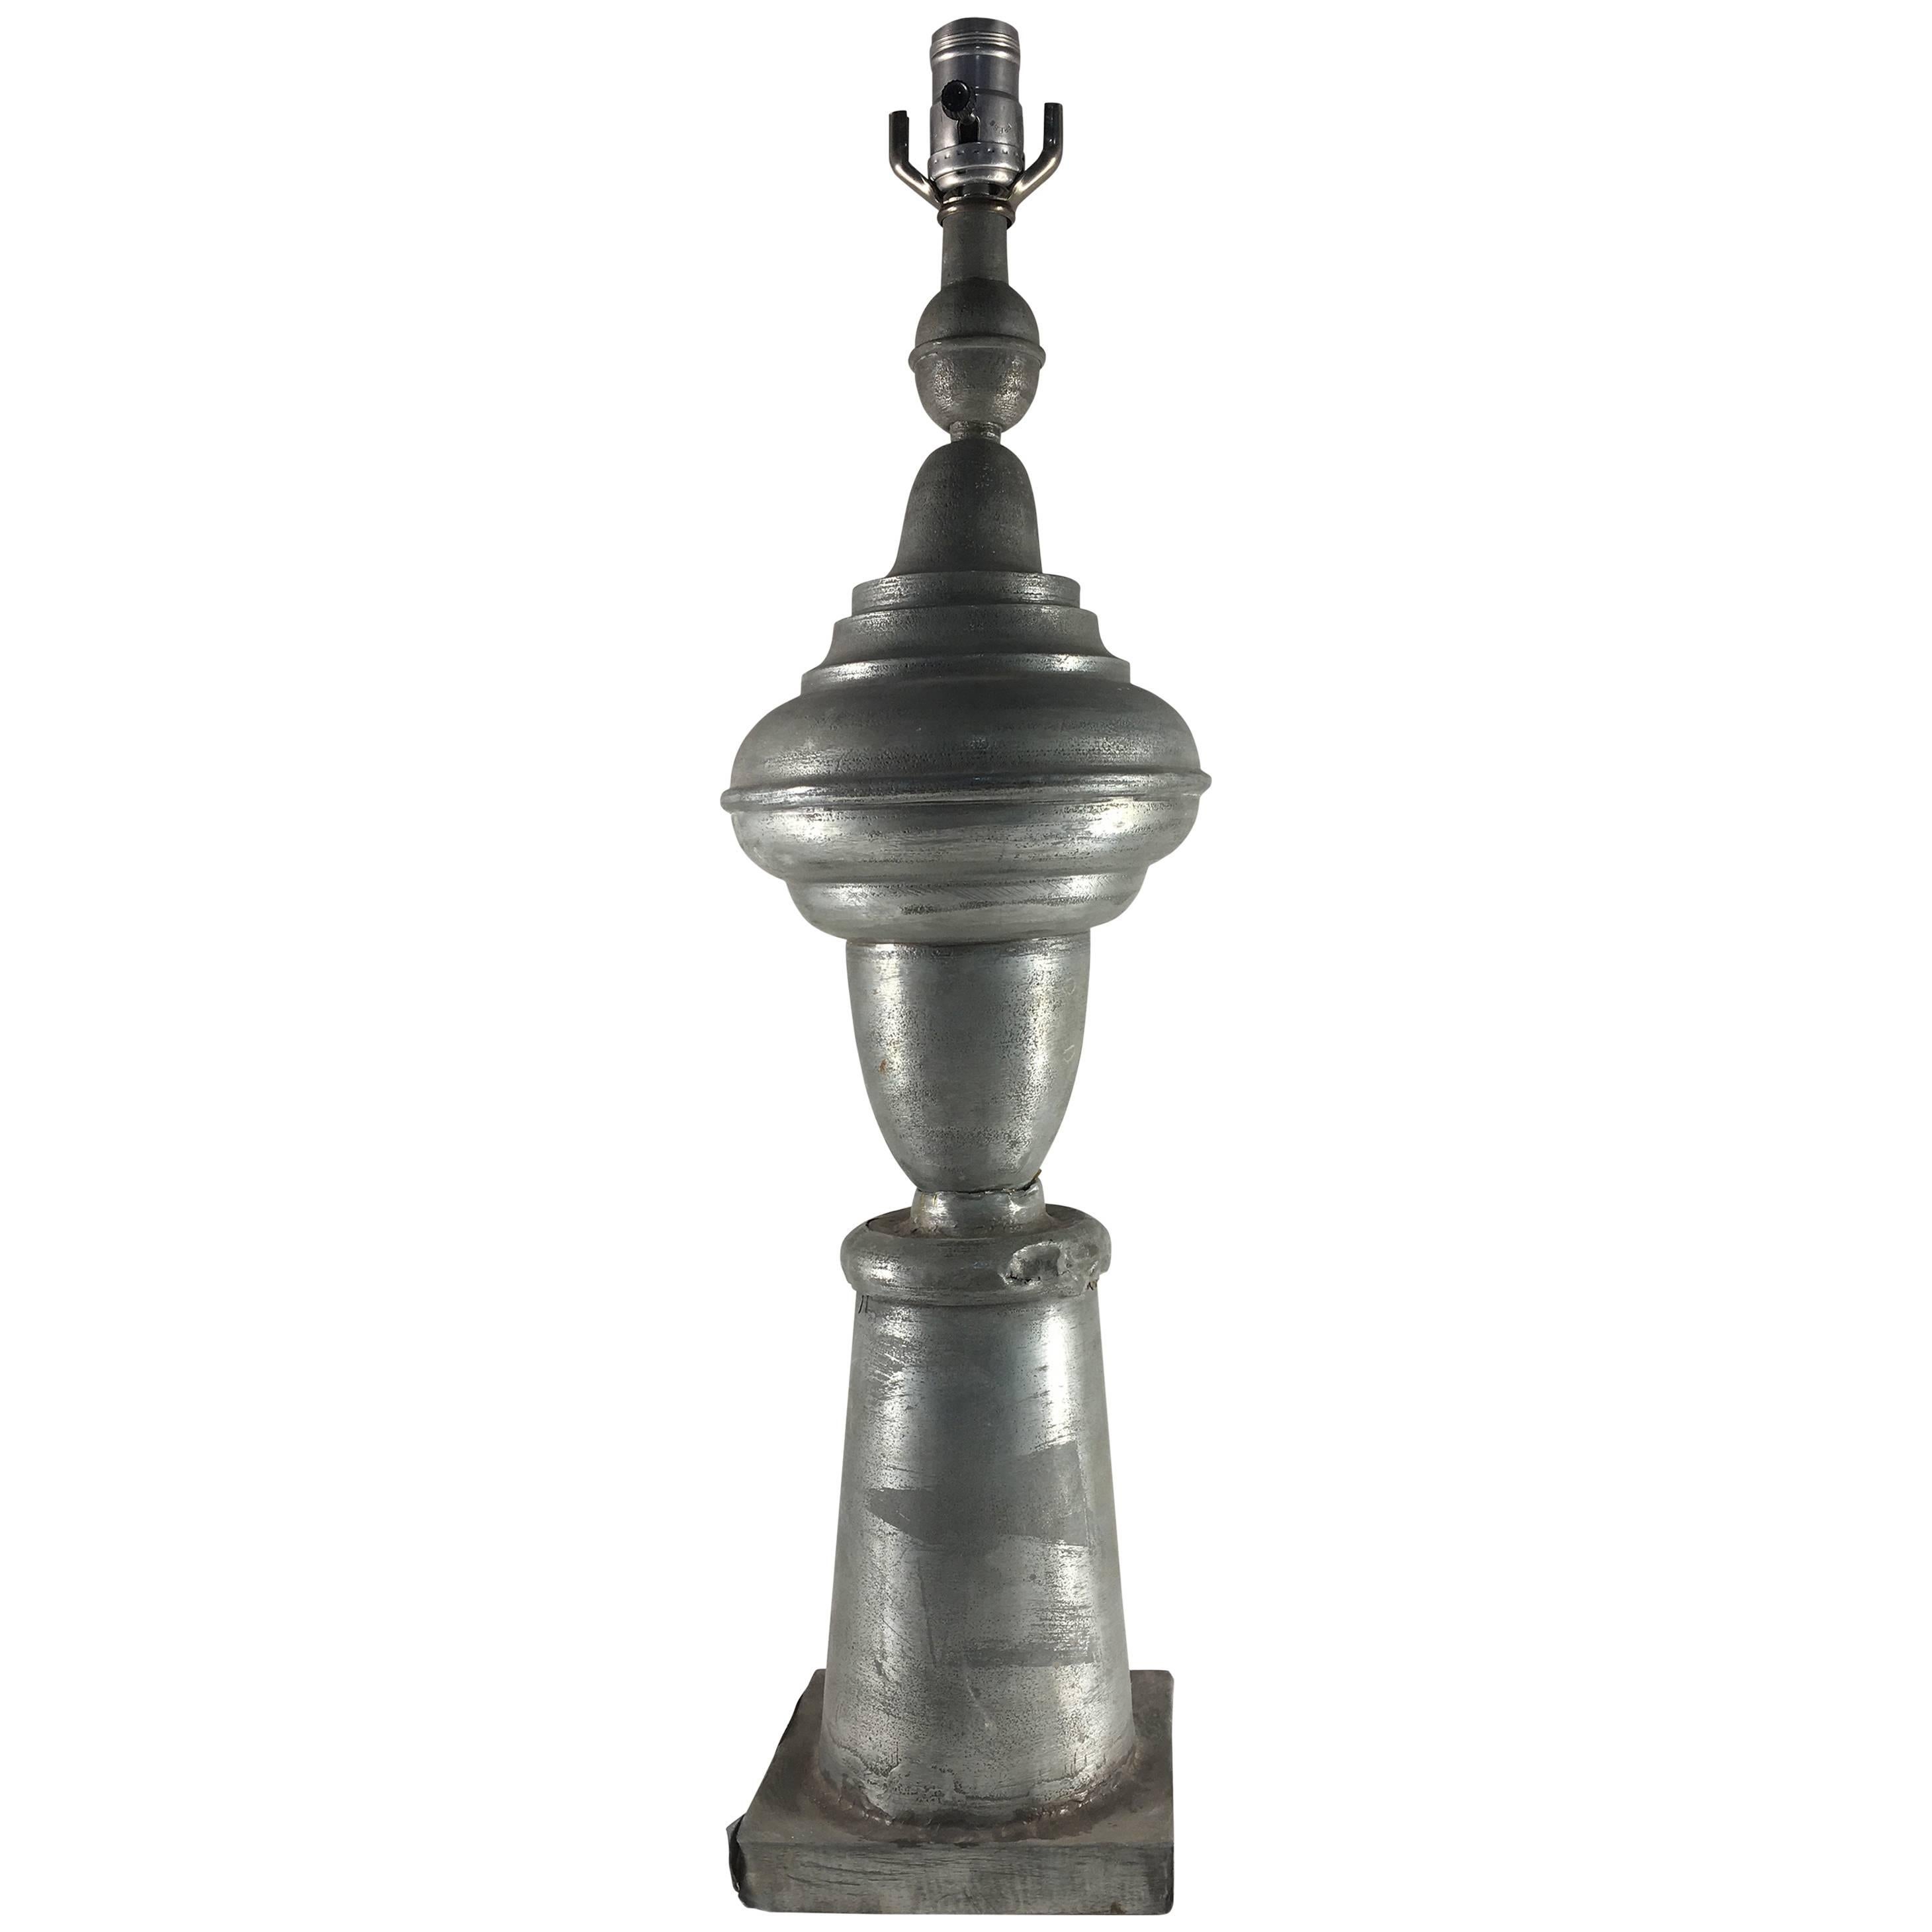 19th Century Zinc Finial Mounted as a Lamp